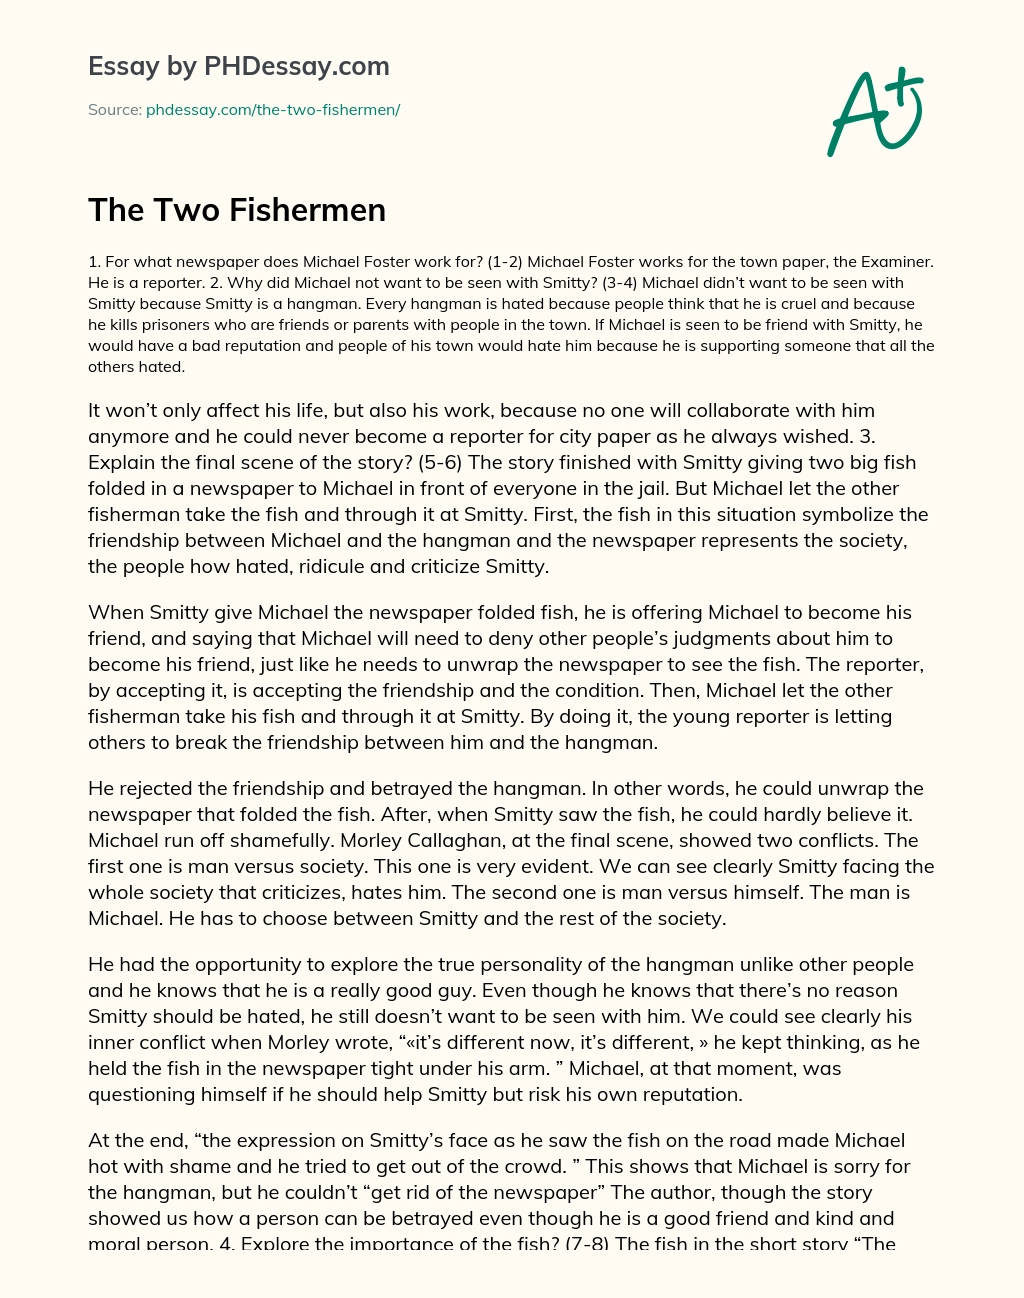 The Two Fishermen essay